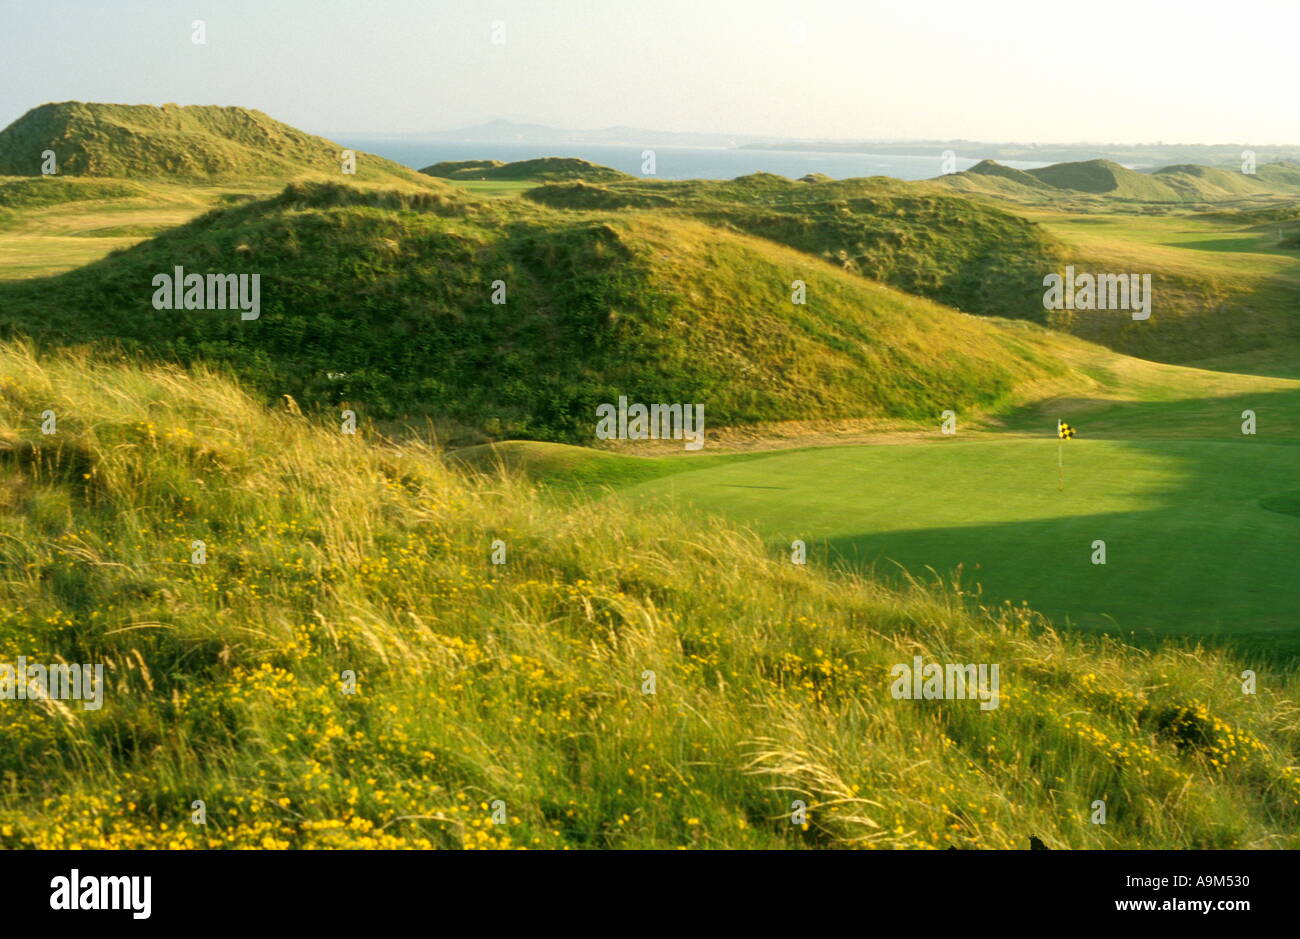 The European Golf Club Brittas Bay Wicklow Ireland 8th Hole Stock Photo -  Alamy